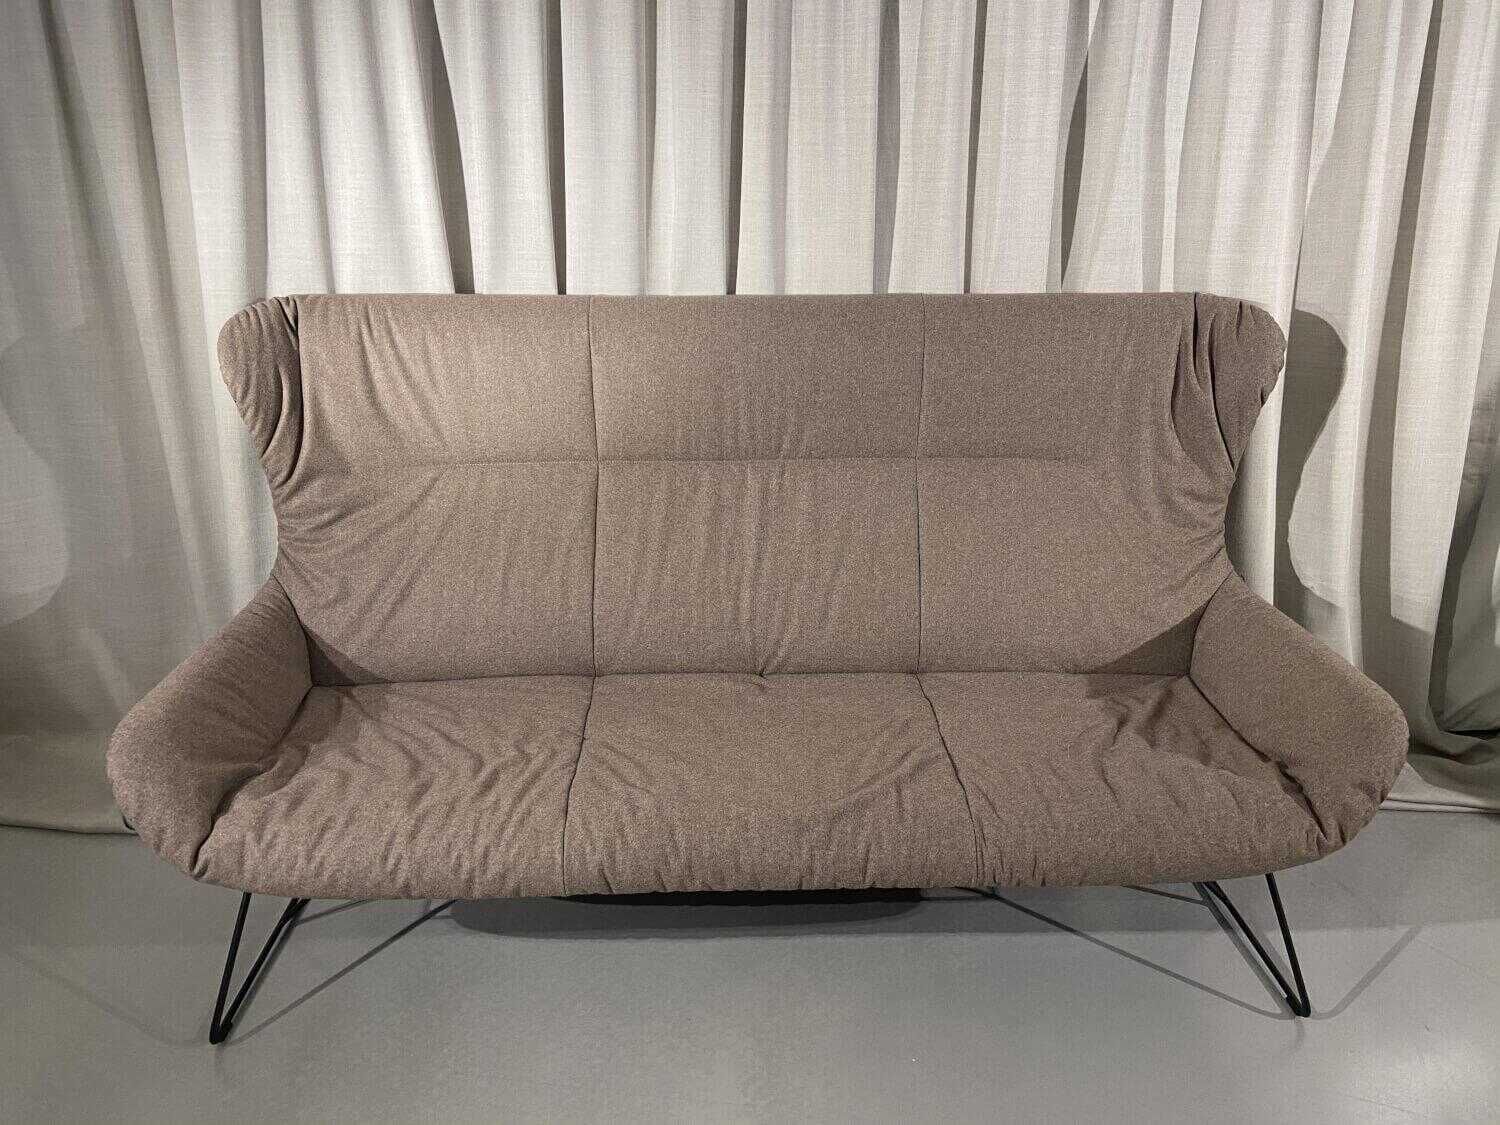 Sofa Leya Wingback Couch Vorne Loden Bergen 428 Beige Hinten Leder Opium Oceano 80007 Blau